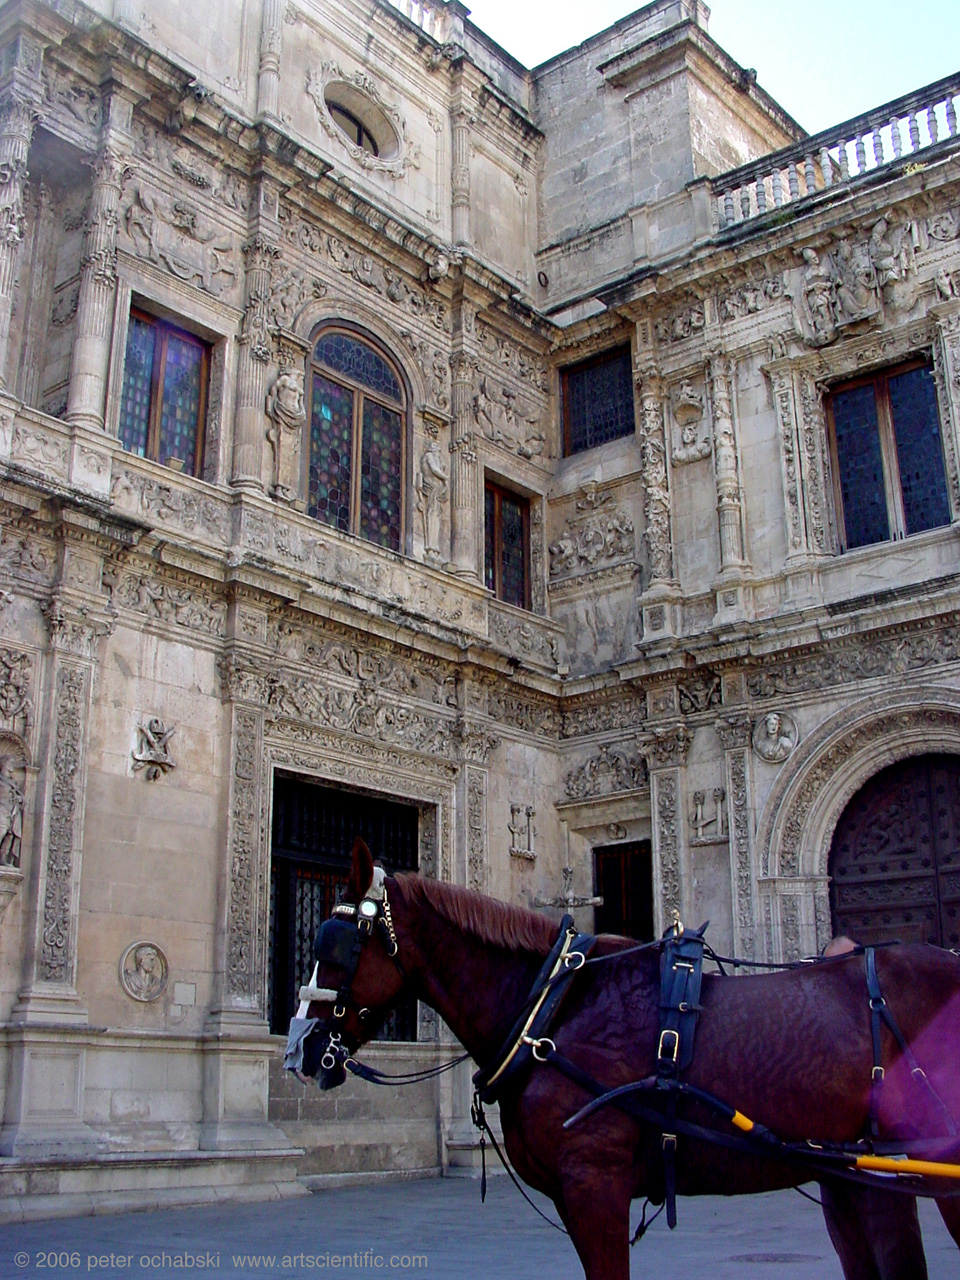 sevilla building and horse